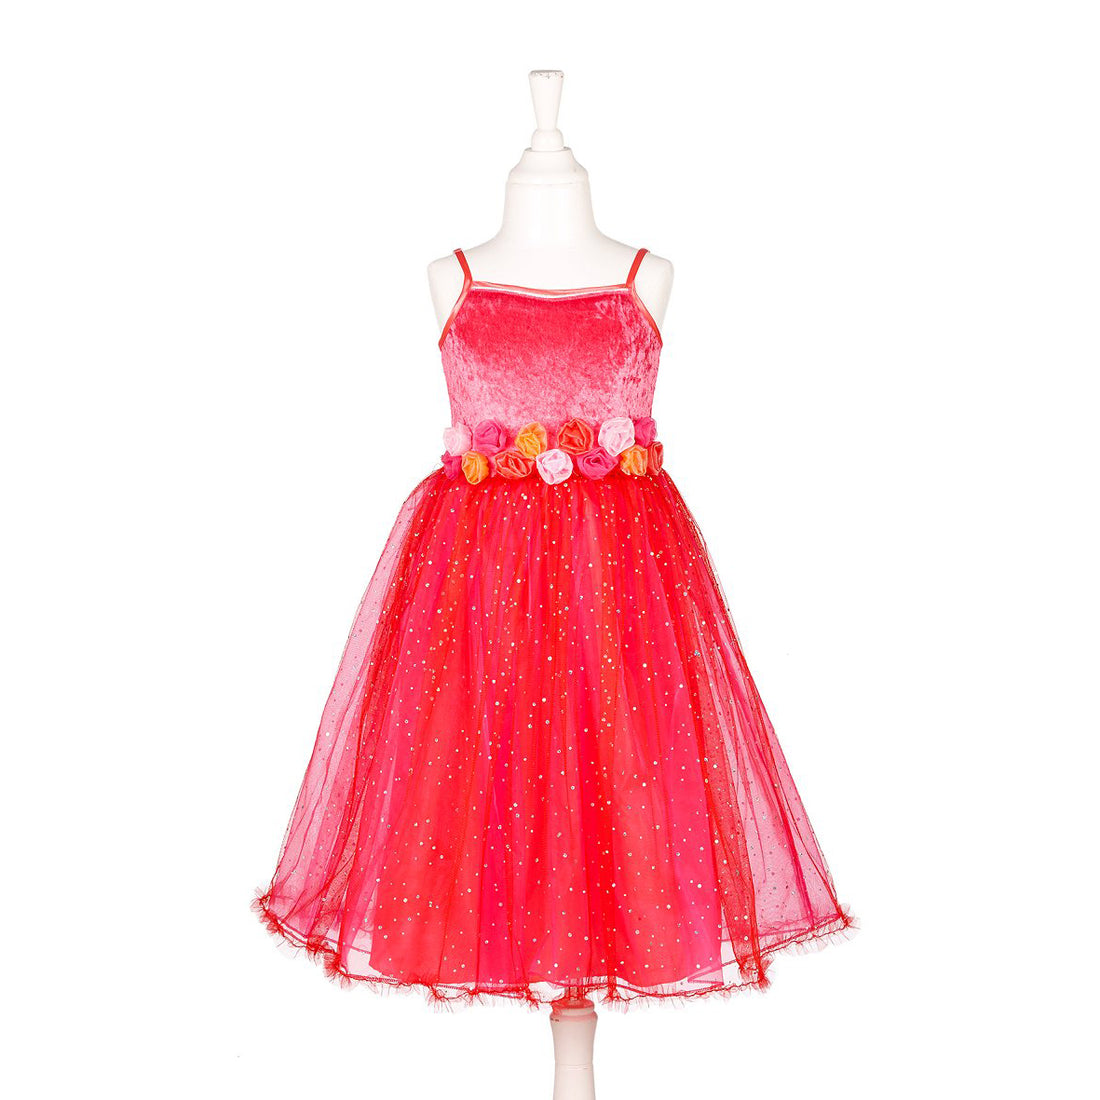 souza-evyanne-dress-red- (1)